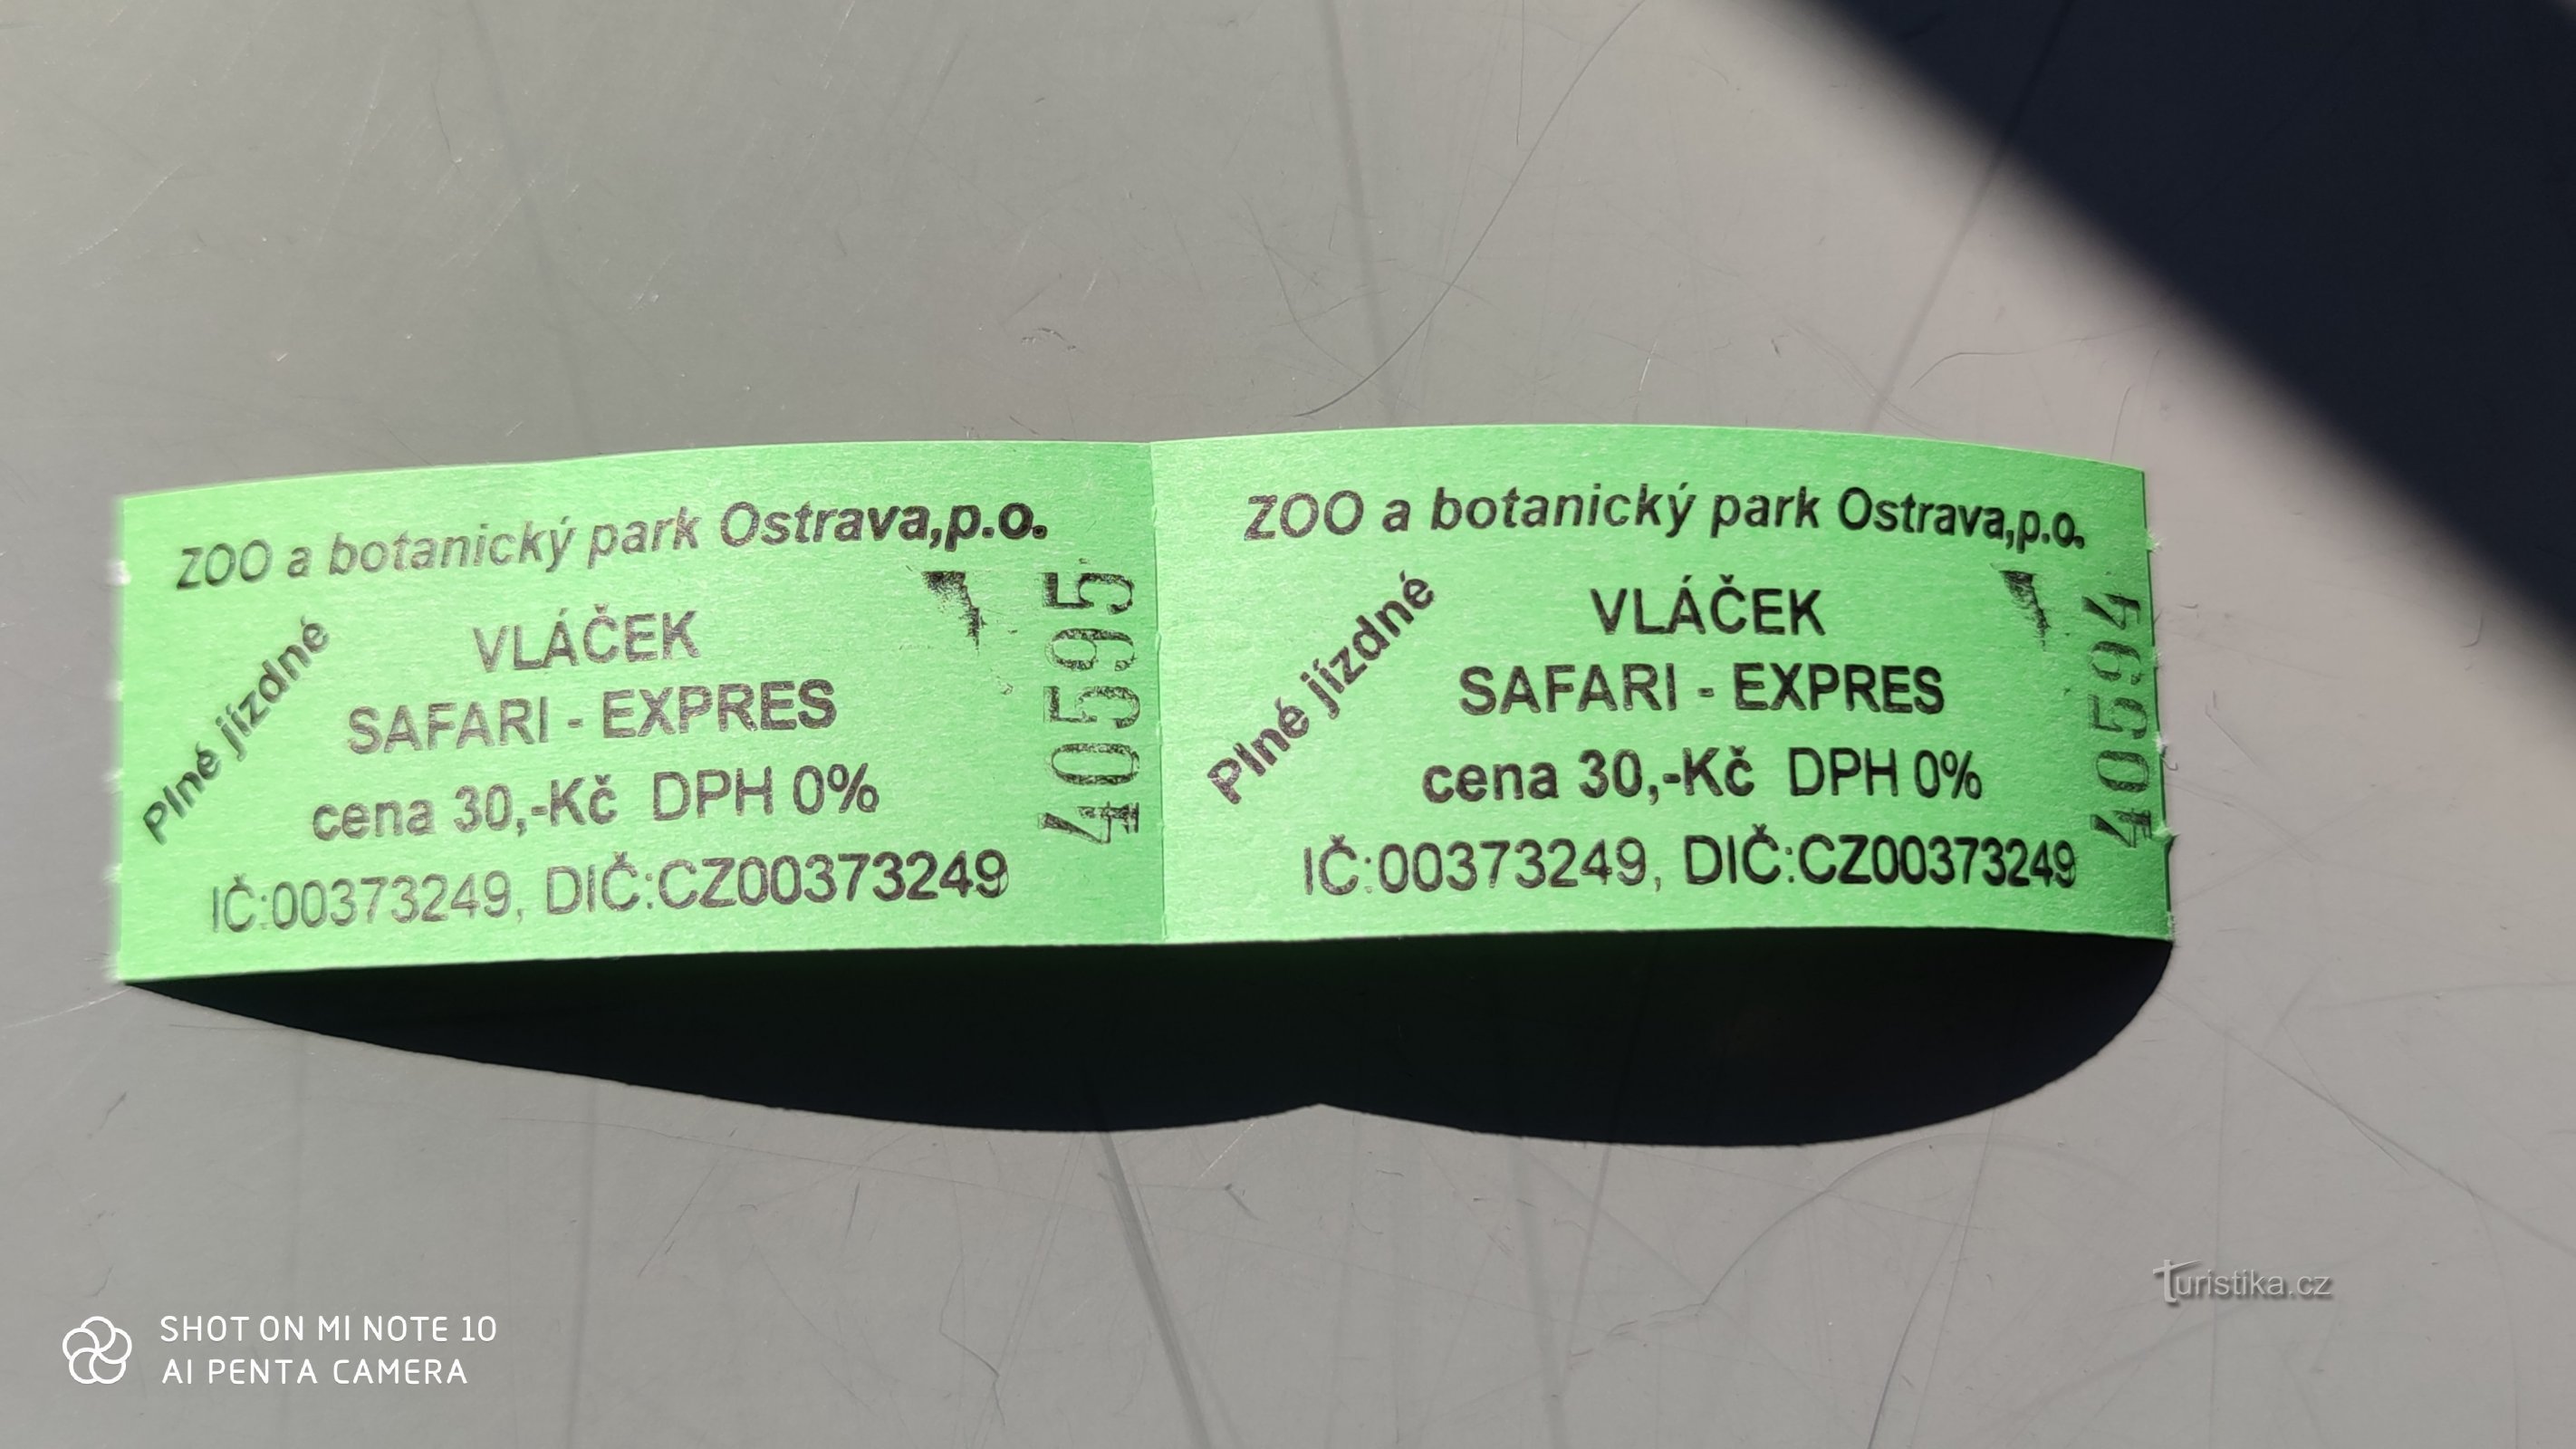 Safari-Express im Zoo Ostrava